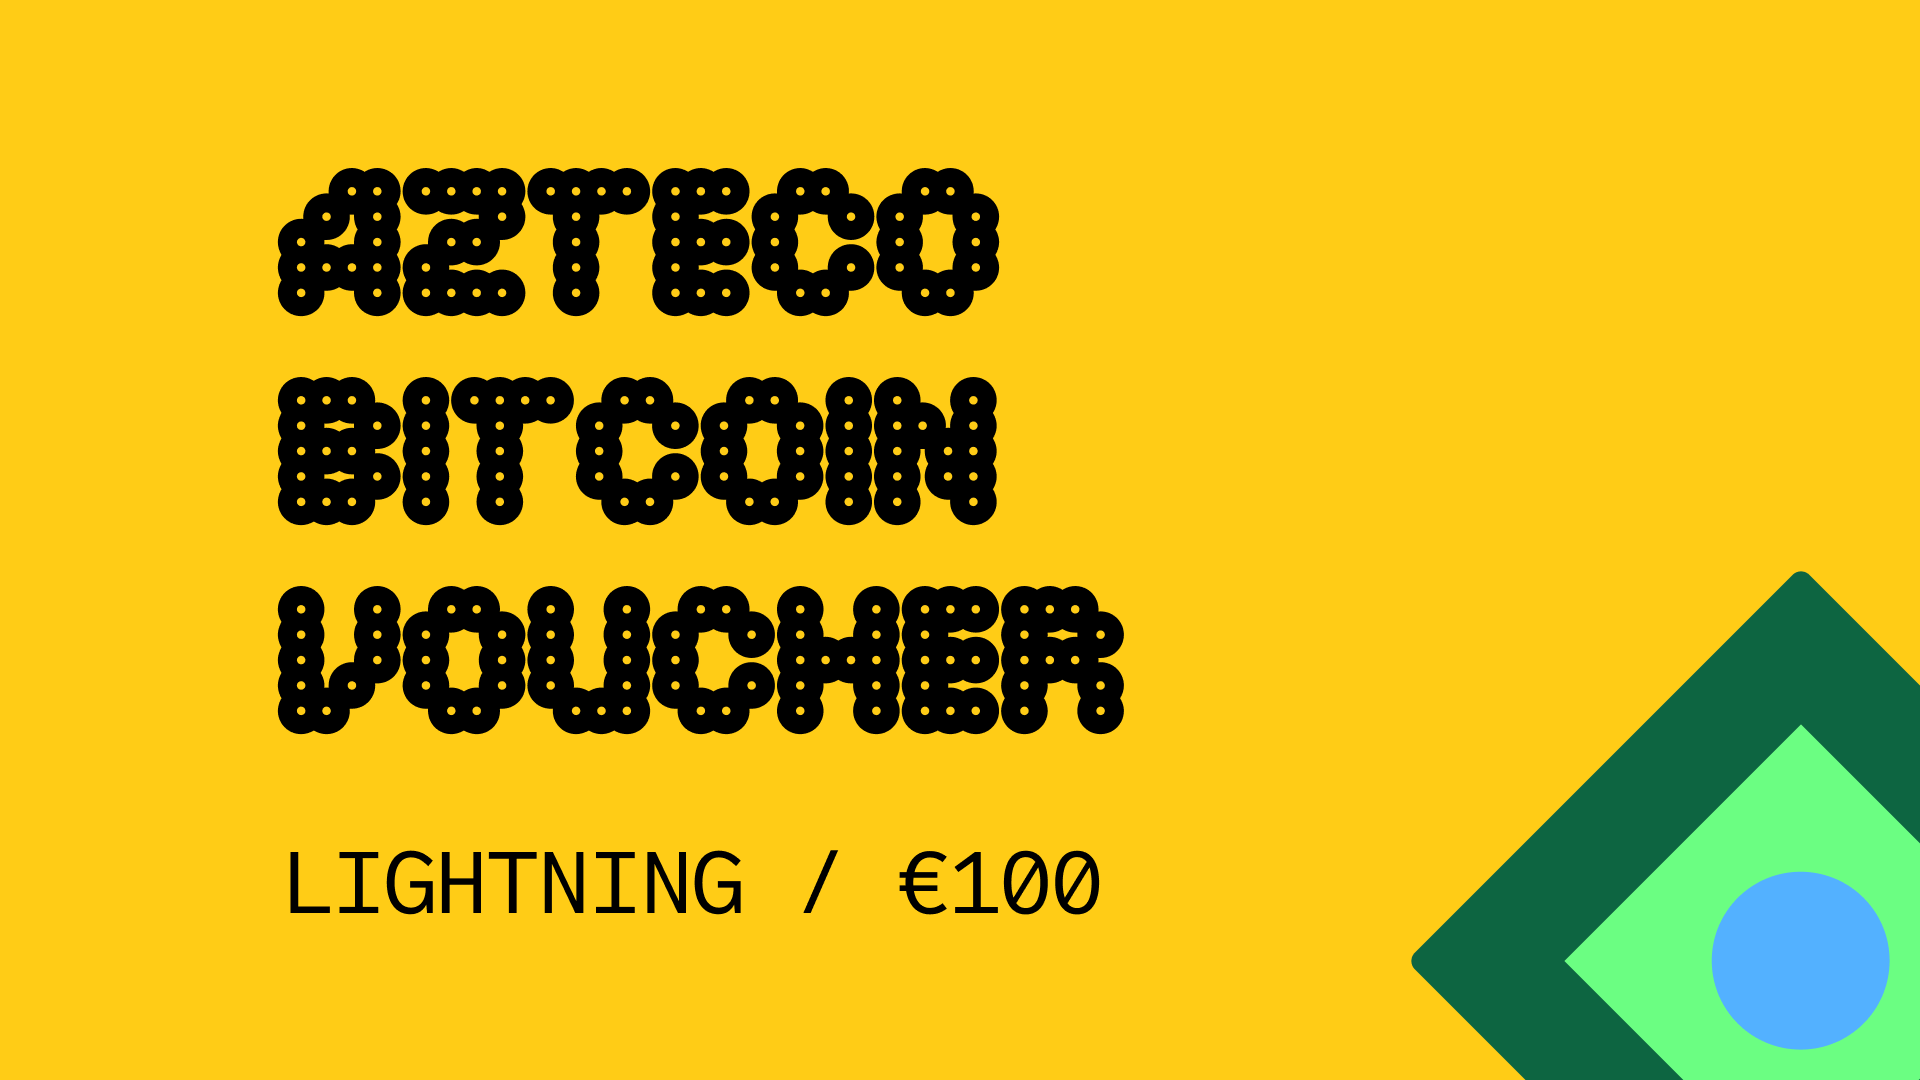 Azteco Bitcoin Lighting €100 Voucher, 112.98 usd